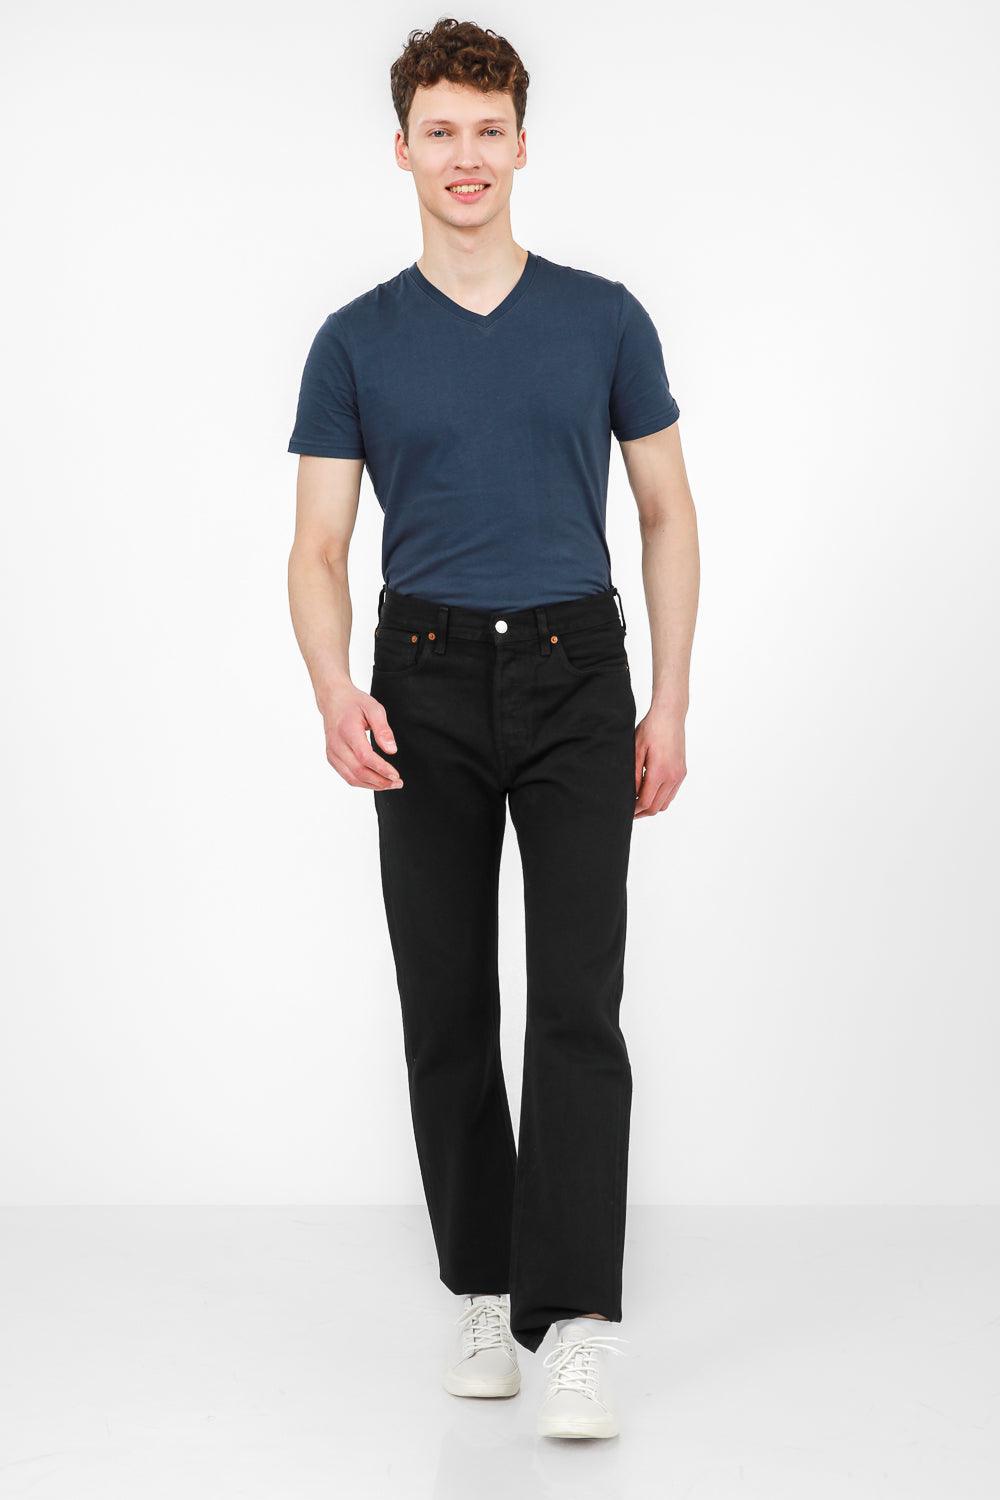 LEVI'S - ג'ינס ORIGINAL FIT 501 שחור - MASHBIR//365